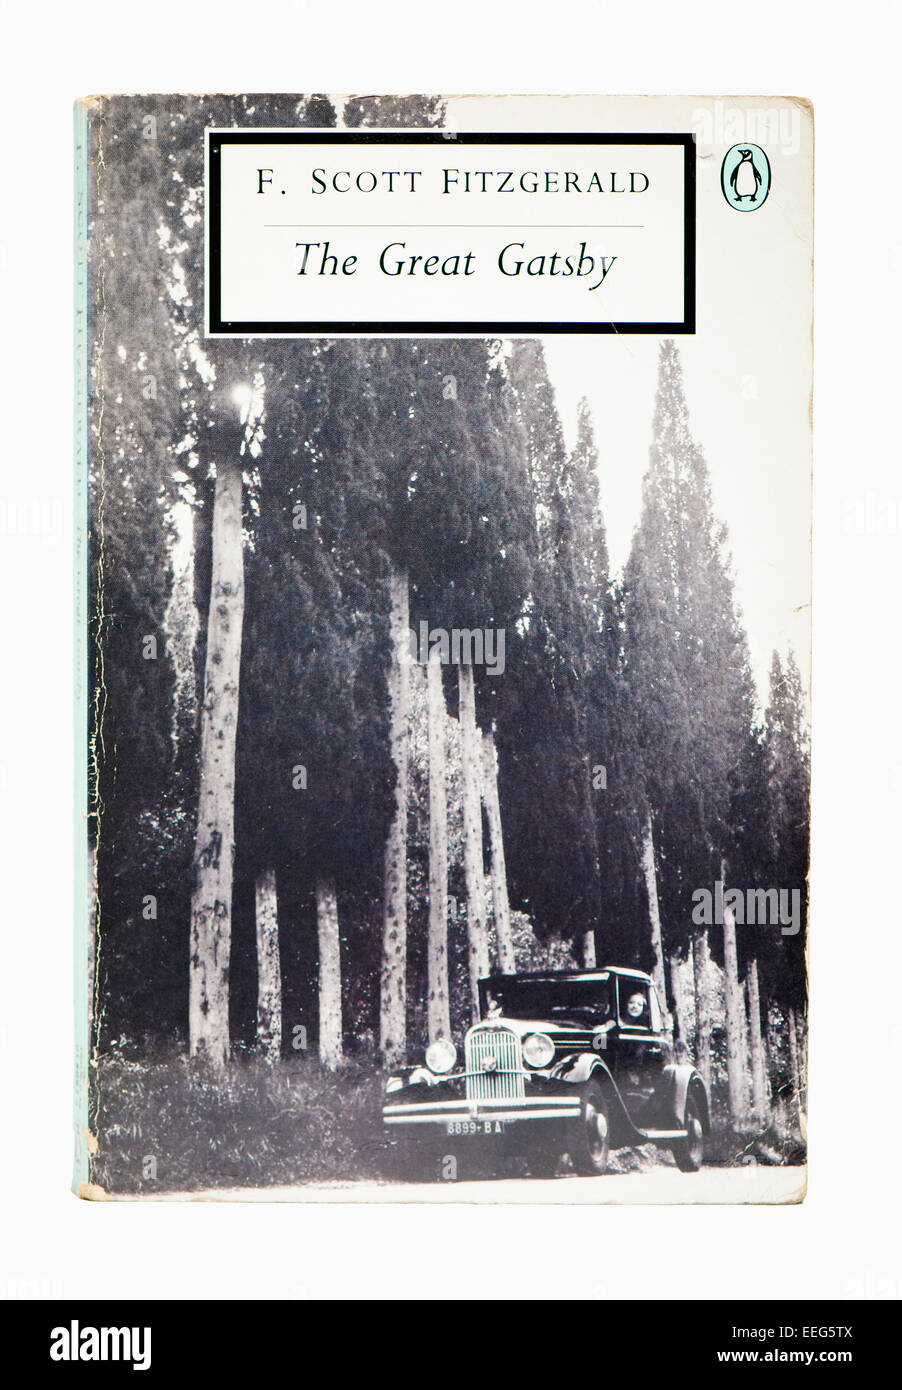 F Scott Fitzgerald The Great Gatsby Penguin Classic book cover Stock Photo